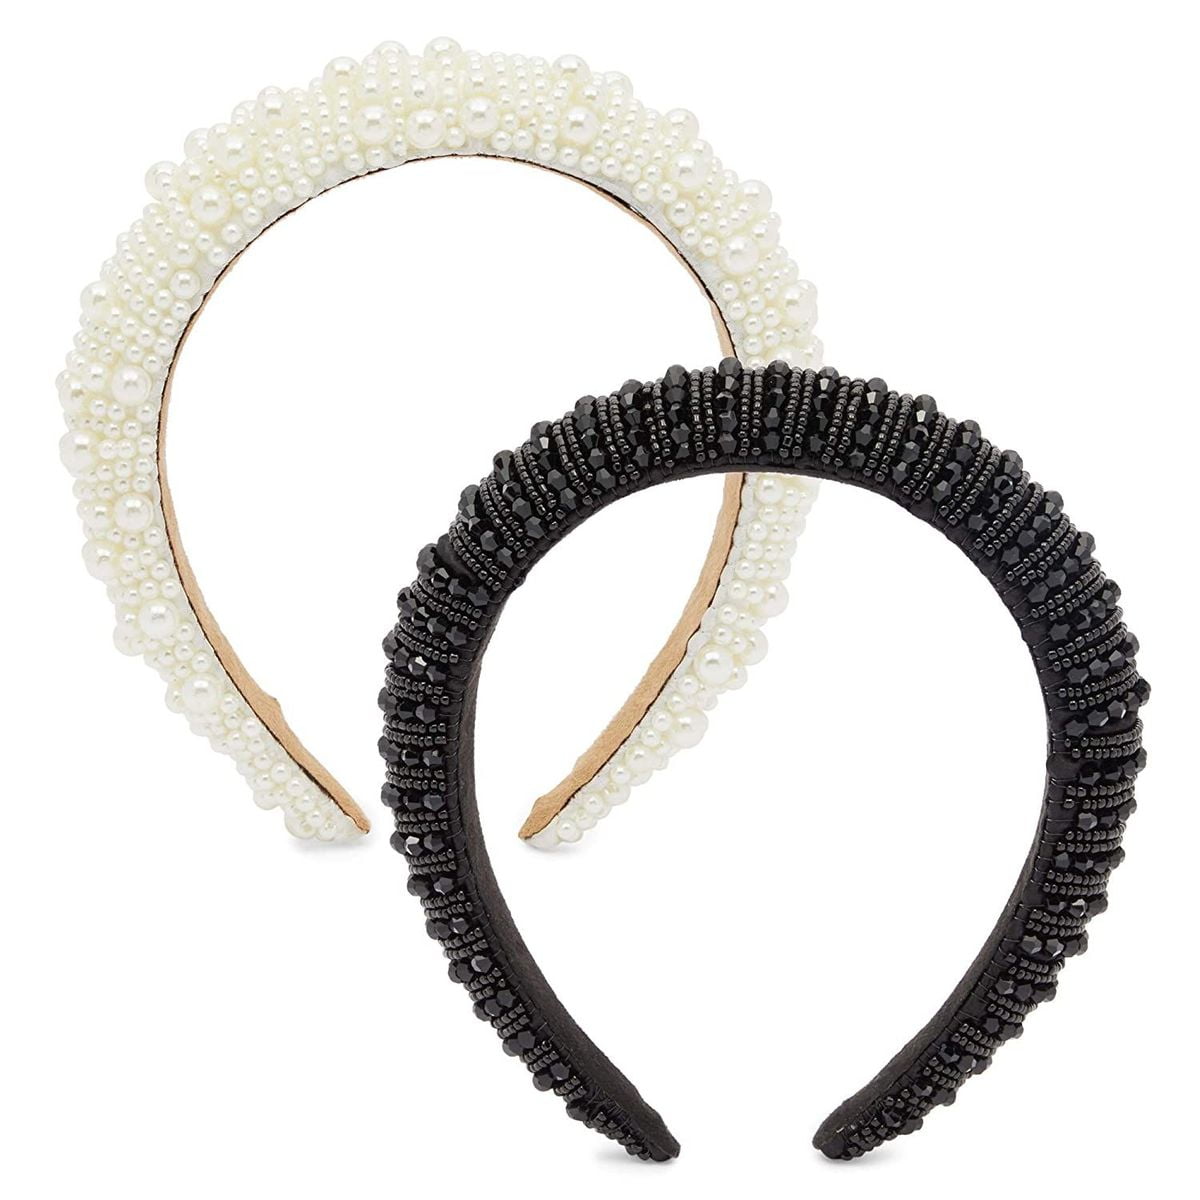 Hair Band Rhinestone Black headband with white and grey pearls